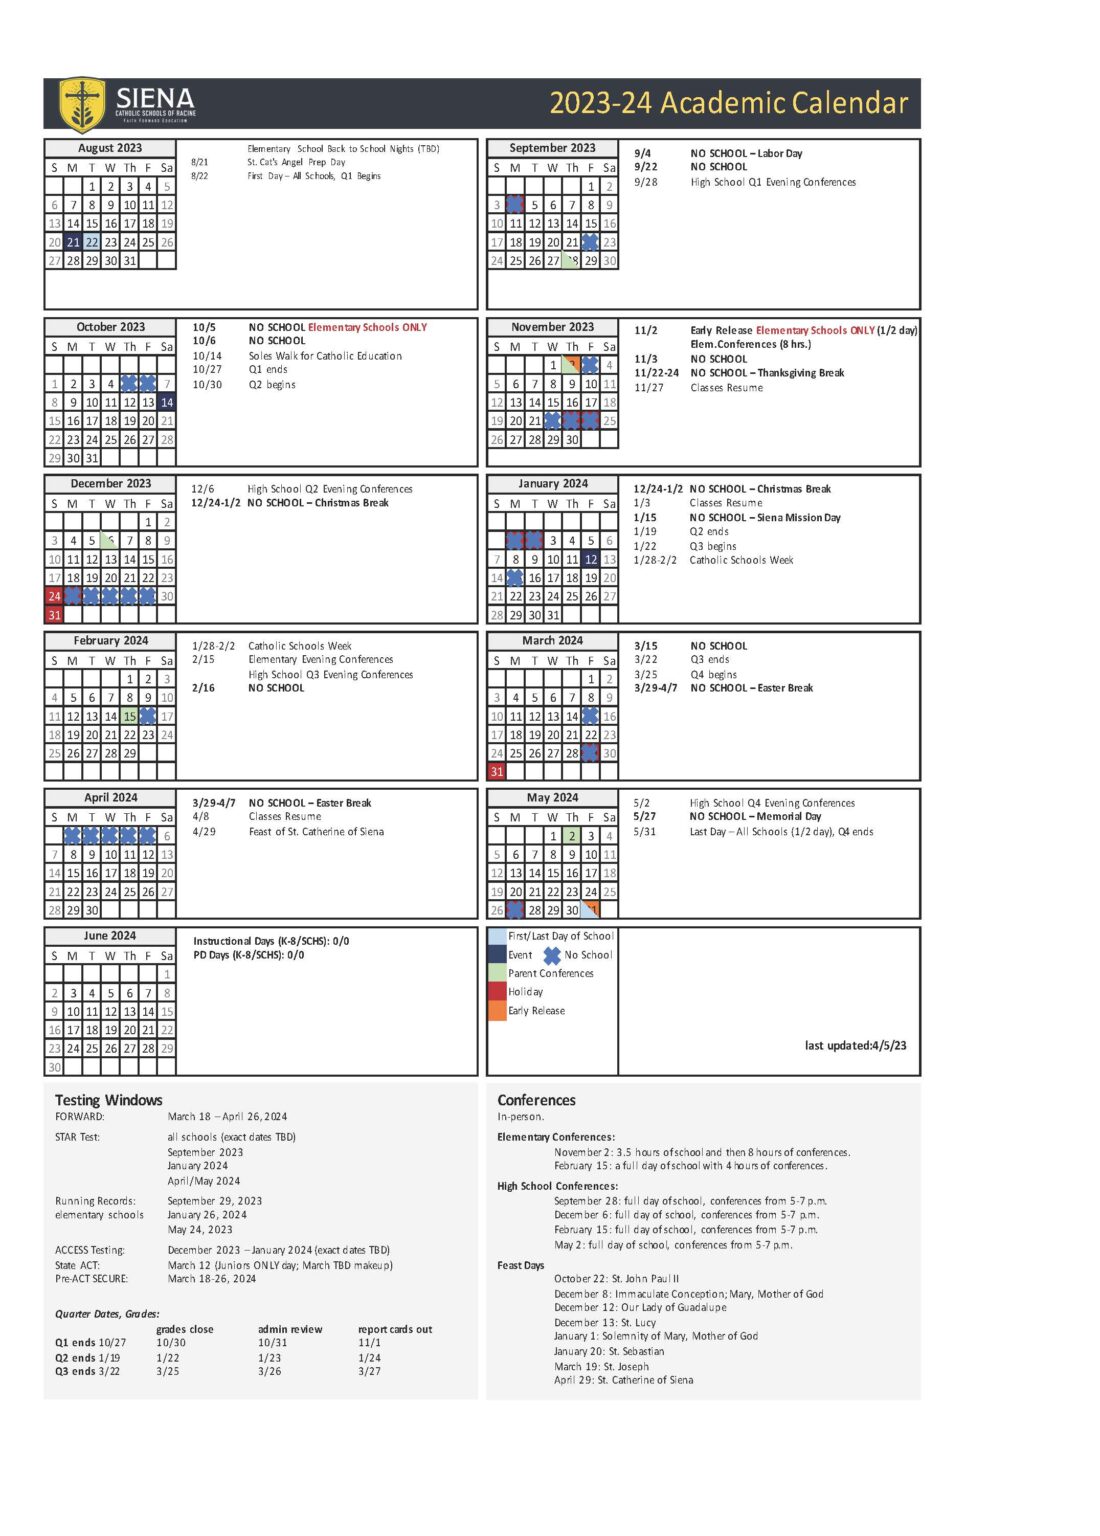 Academic Calendar Siena Catholic Schools